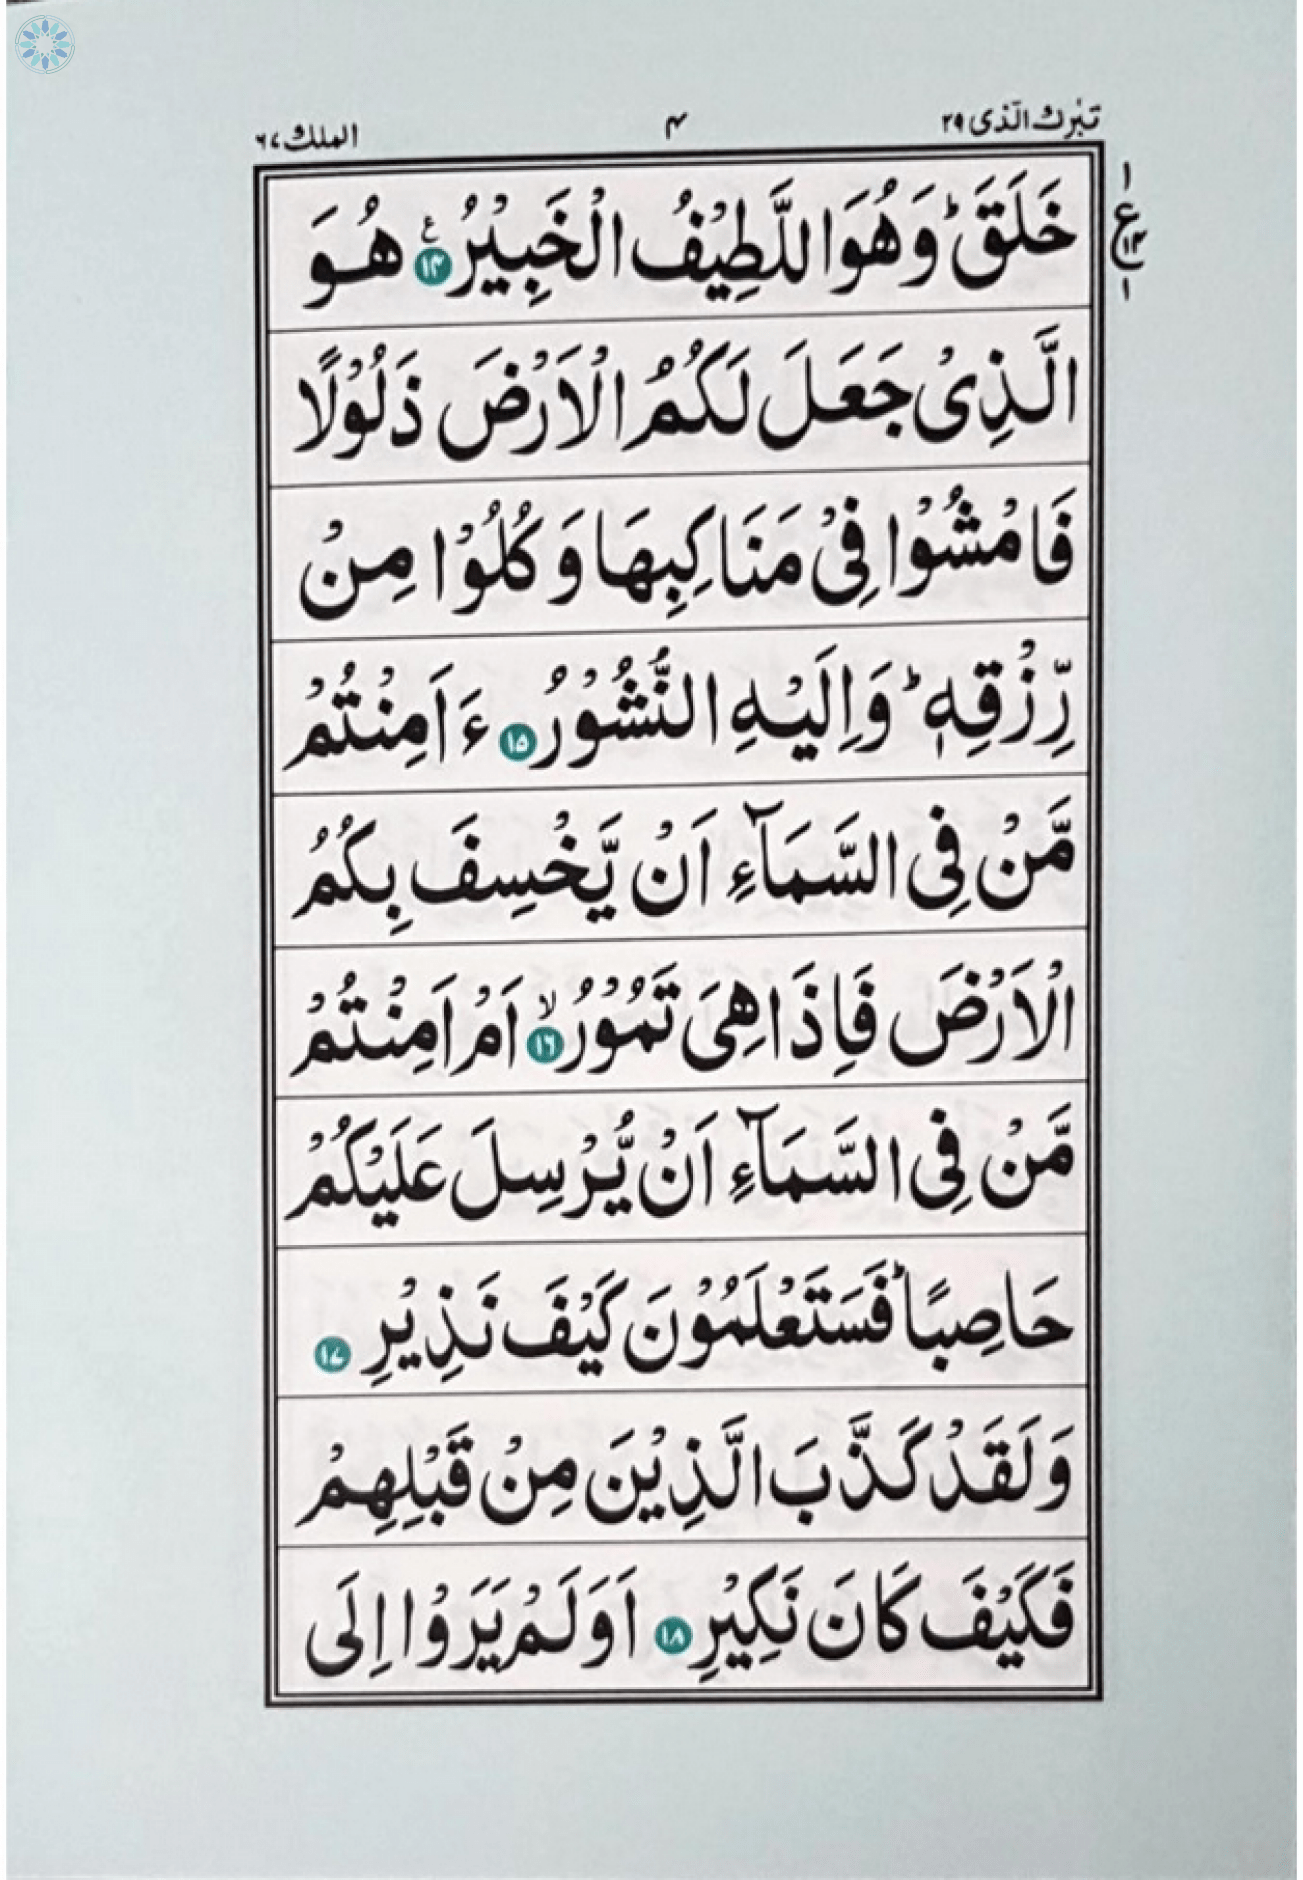 Qur'an › South African Qur'an › Surah Al-Mulk # 18K